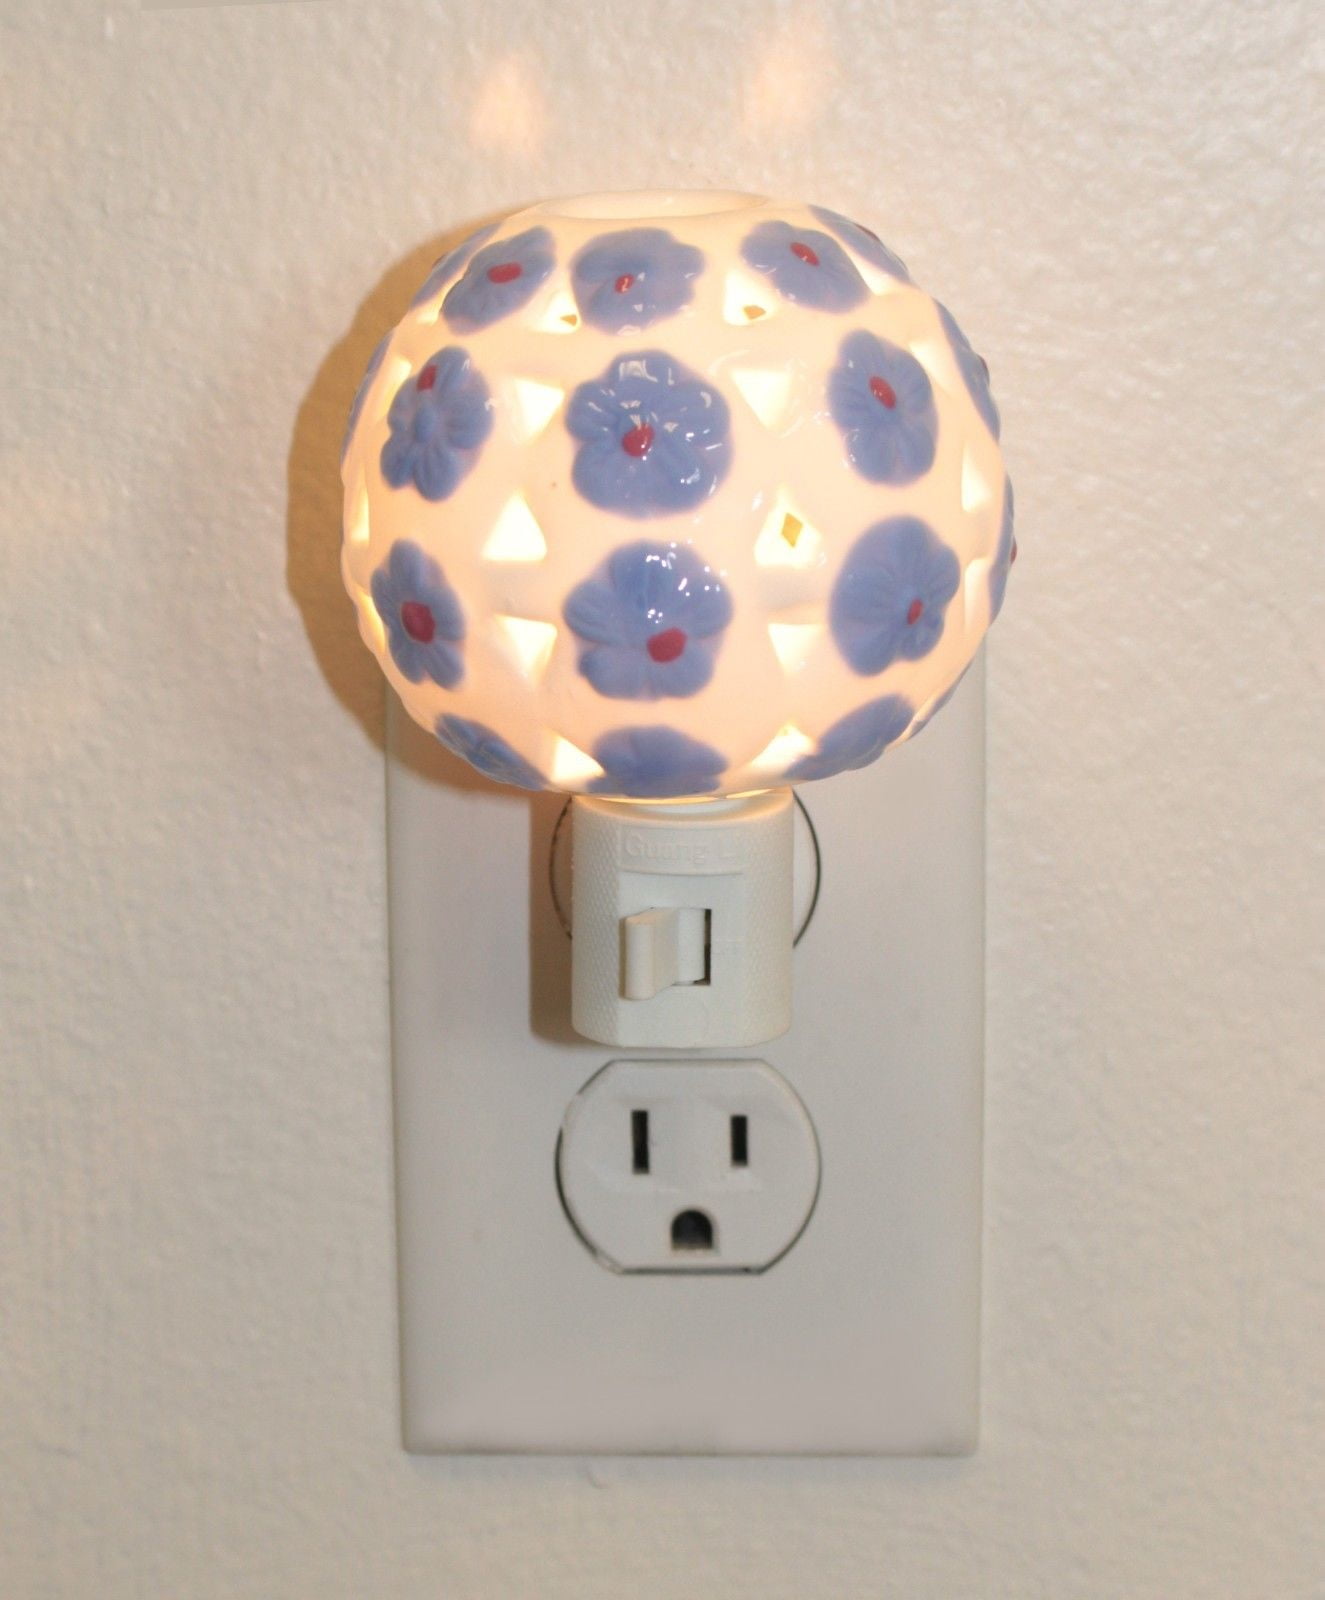 Daisy Ceramic Night Light Plug In On/Off Switch Nightlight Tea Light Pink 4567 